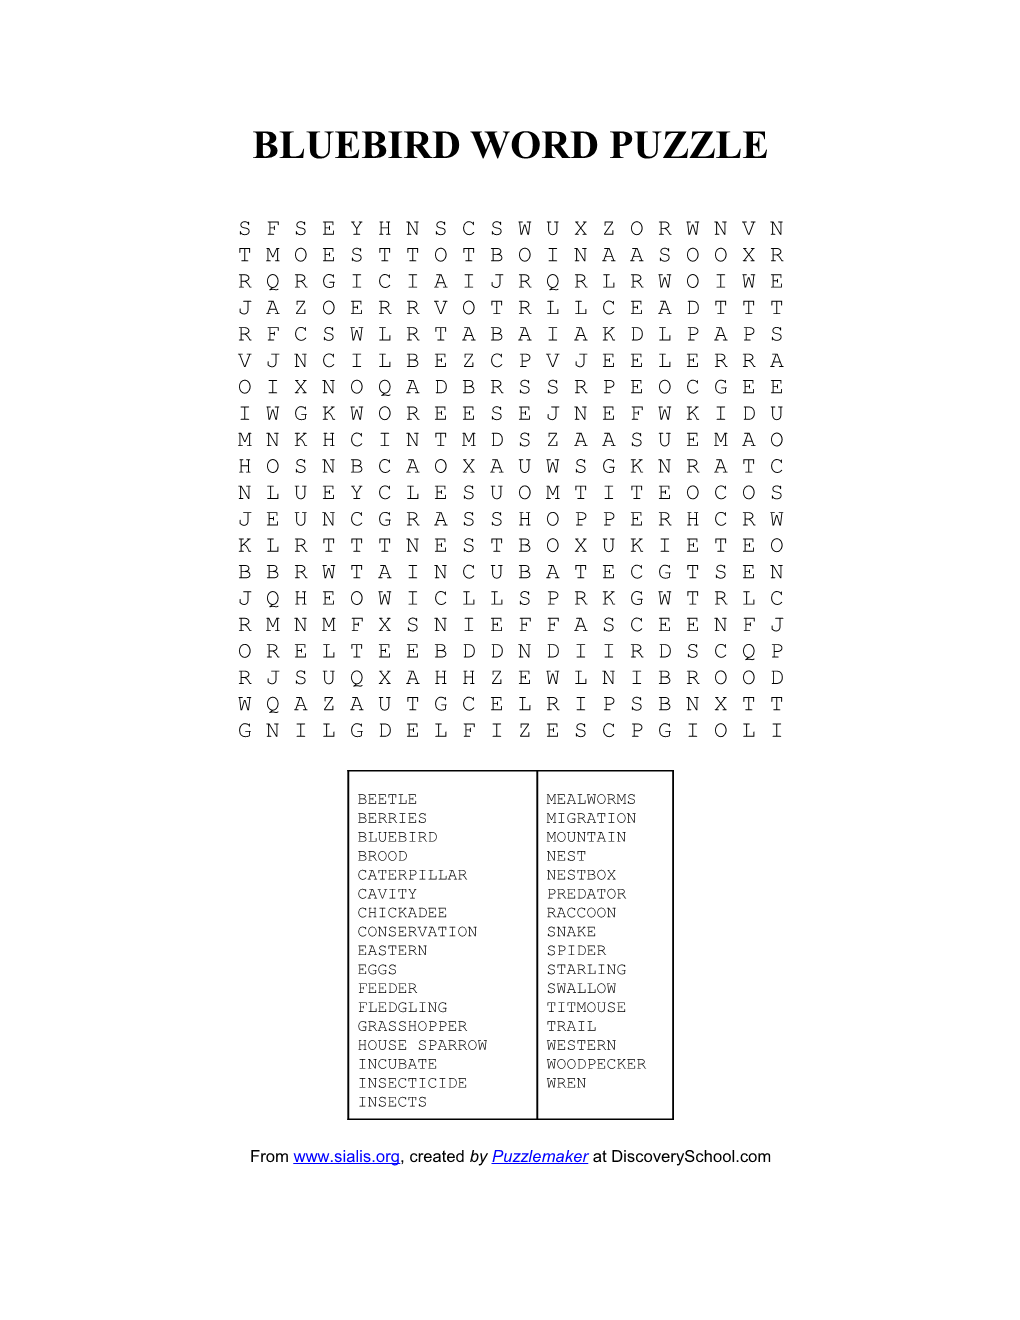 Bluebird Word Puzzle